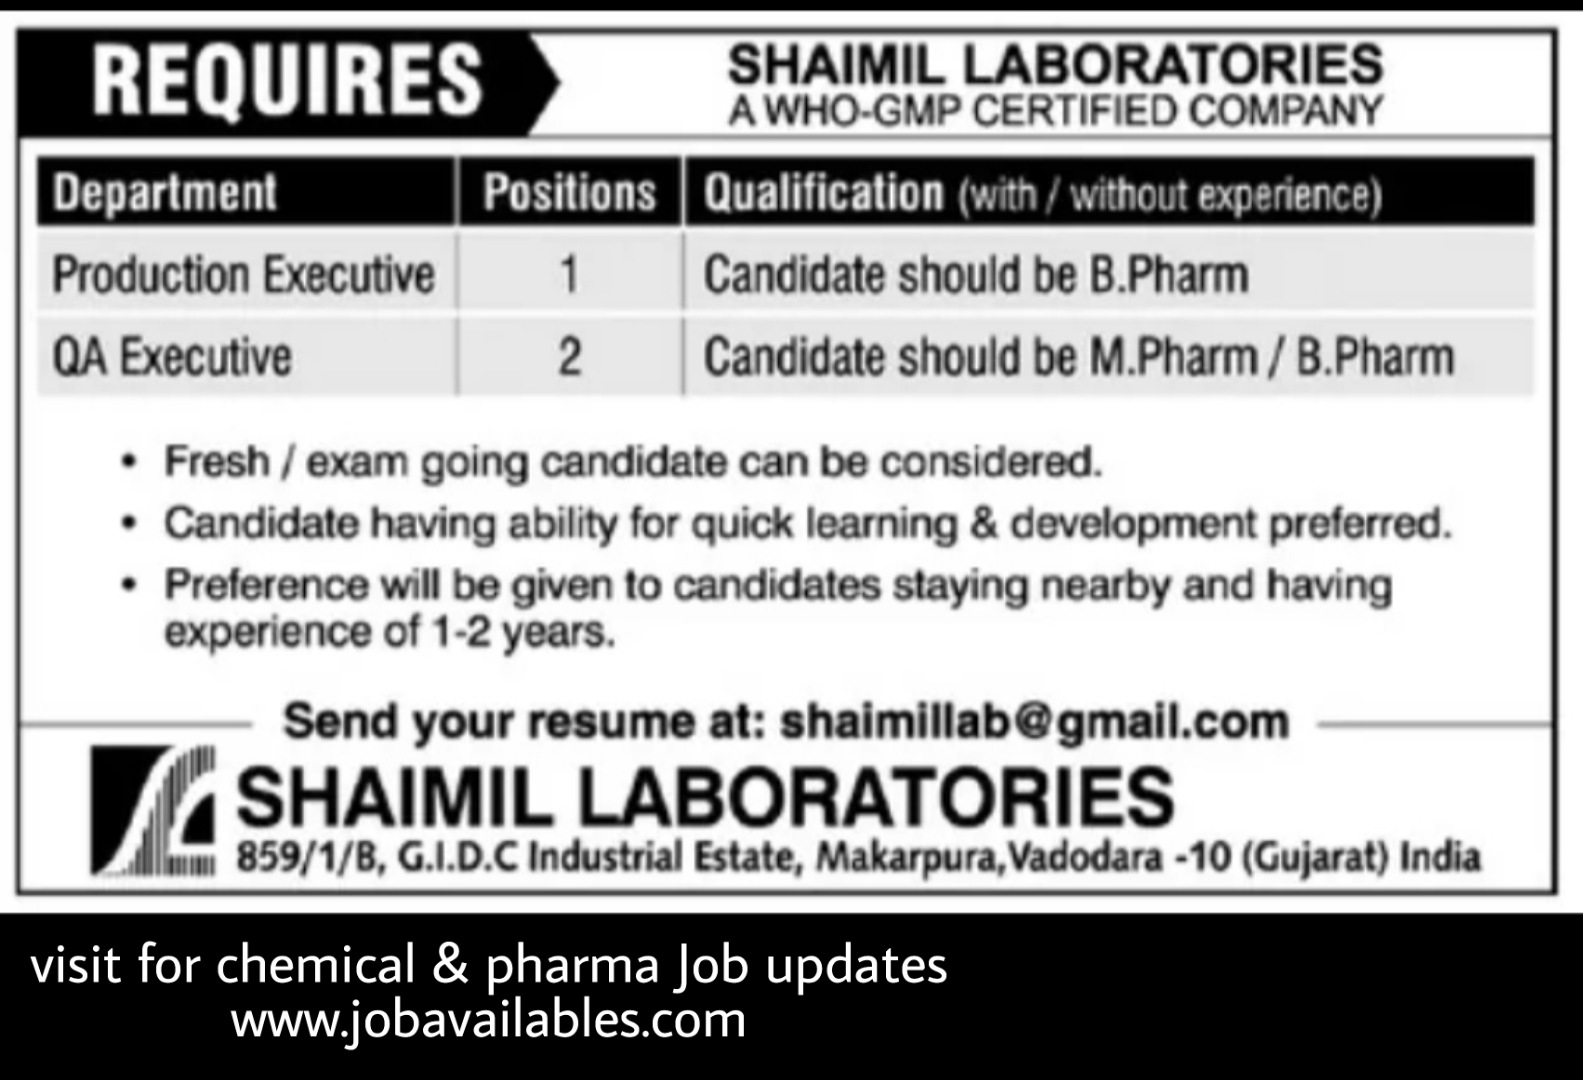 Job Availables, Shaimil Laboratories Gujarat Job Opening For Fresher & Experienced B.Pharm/ M.Pharm